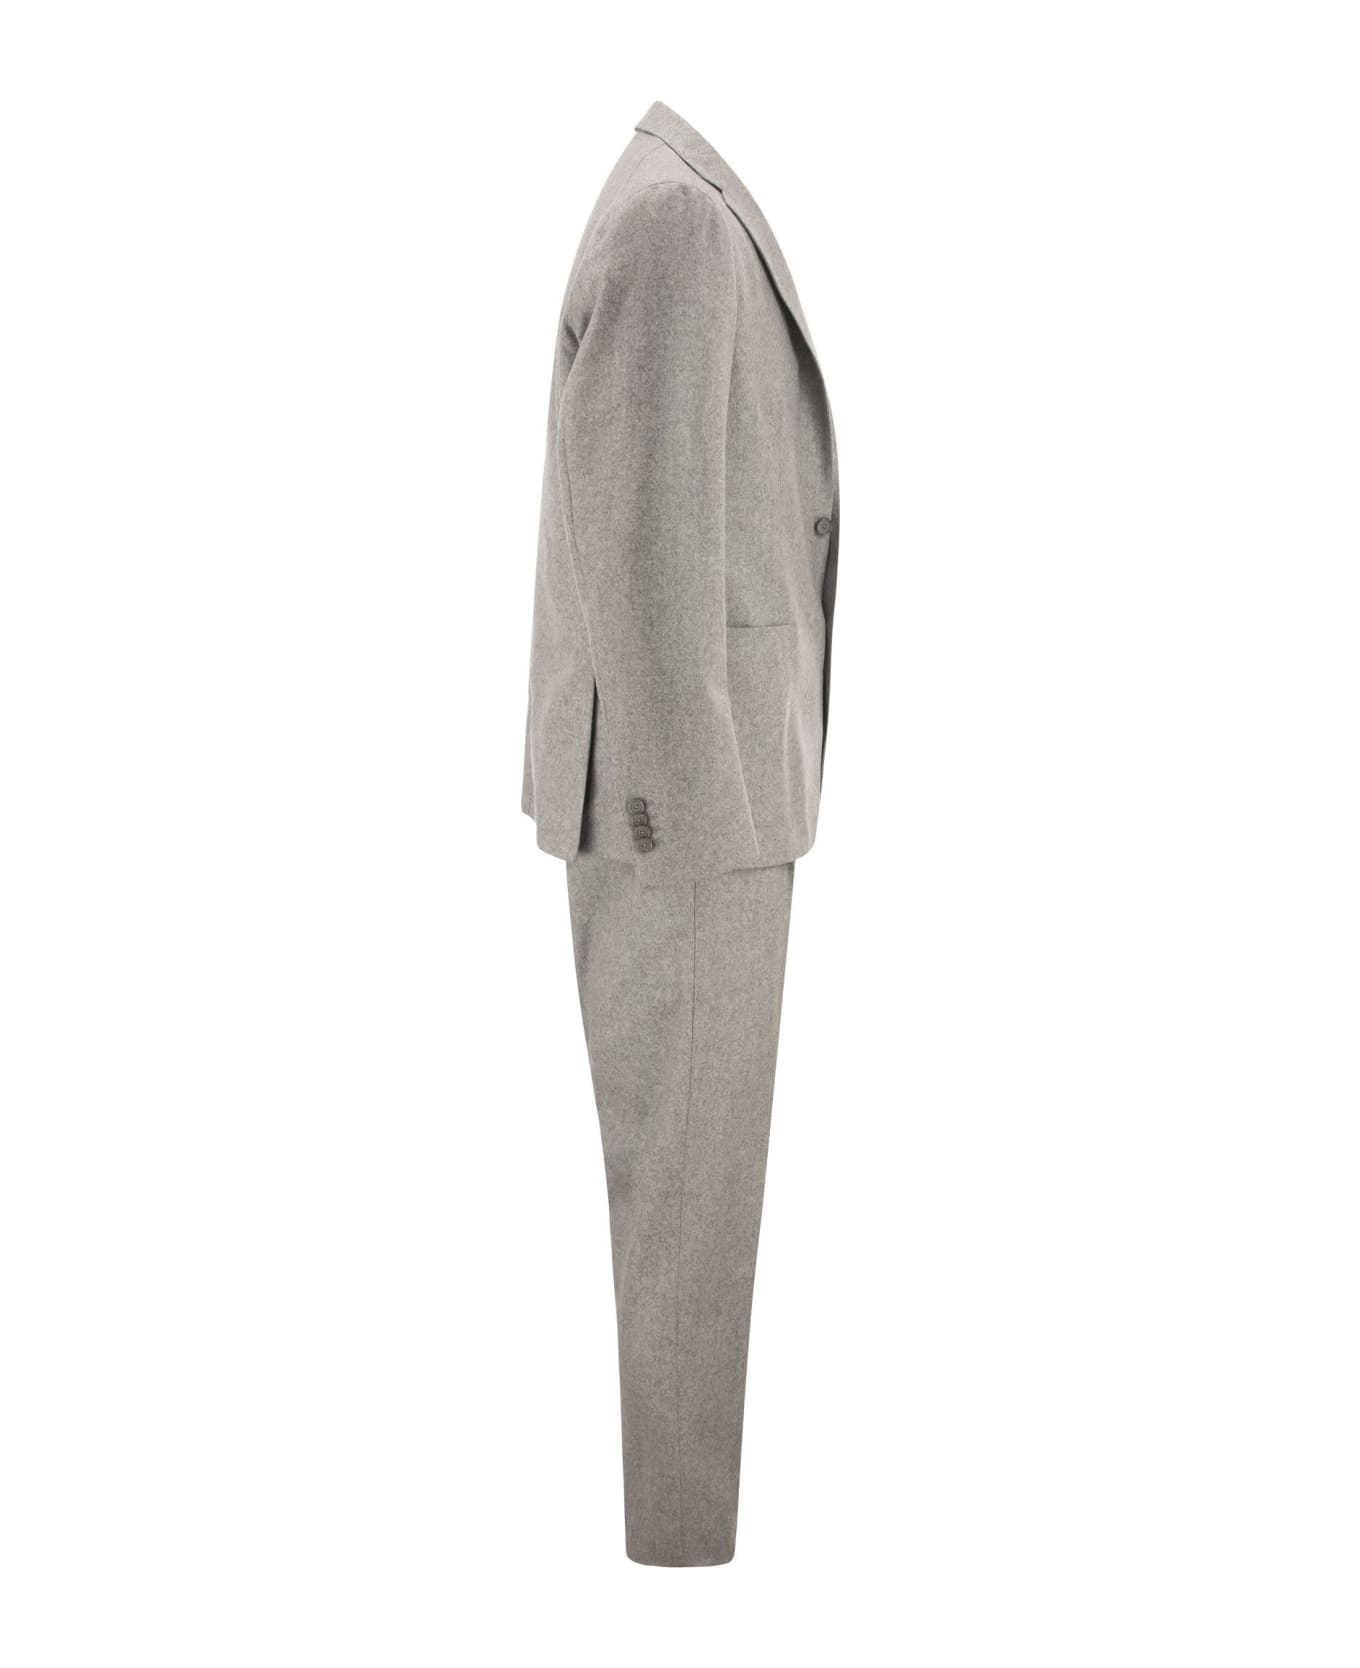 Tagliatore Virgin Wool Suit - Light Grey スーツ